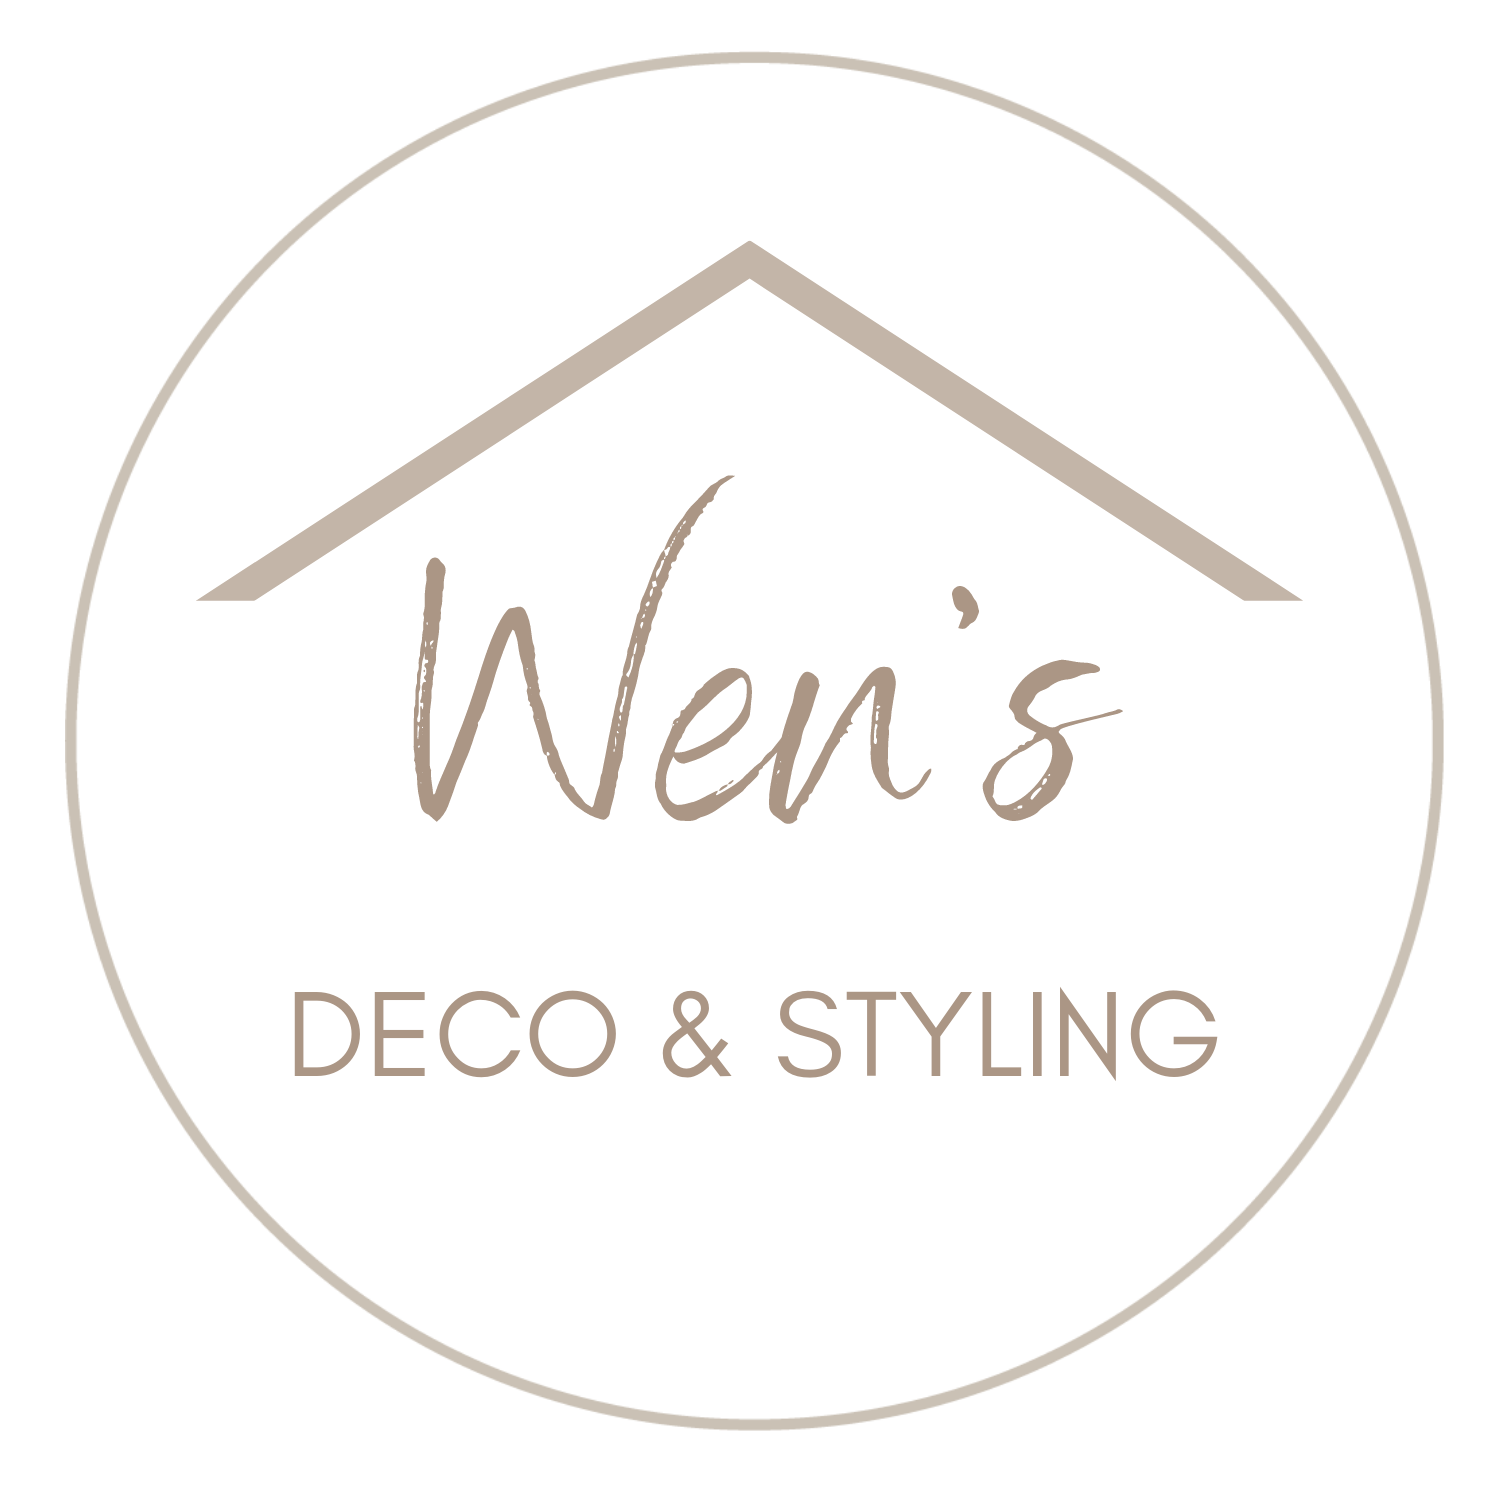 Wen’s Deco & Styling